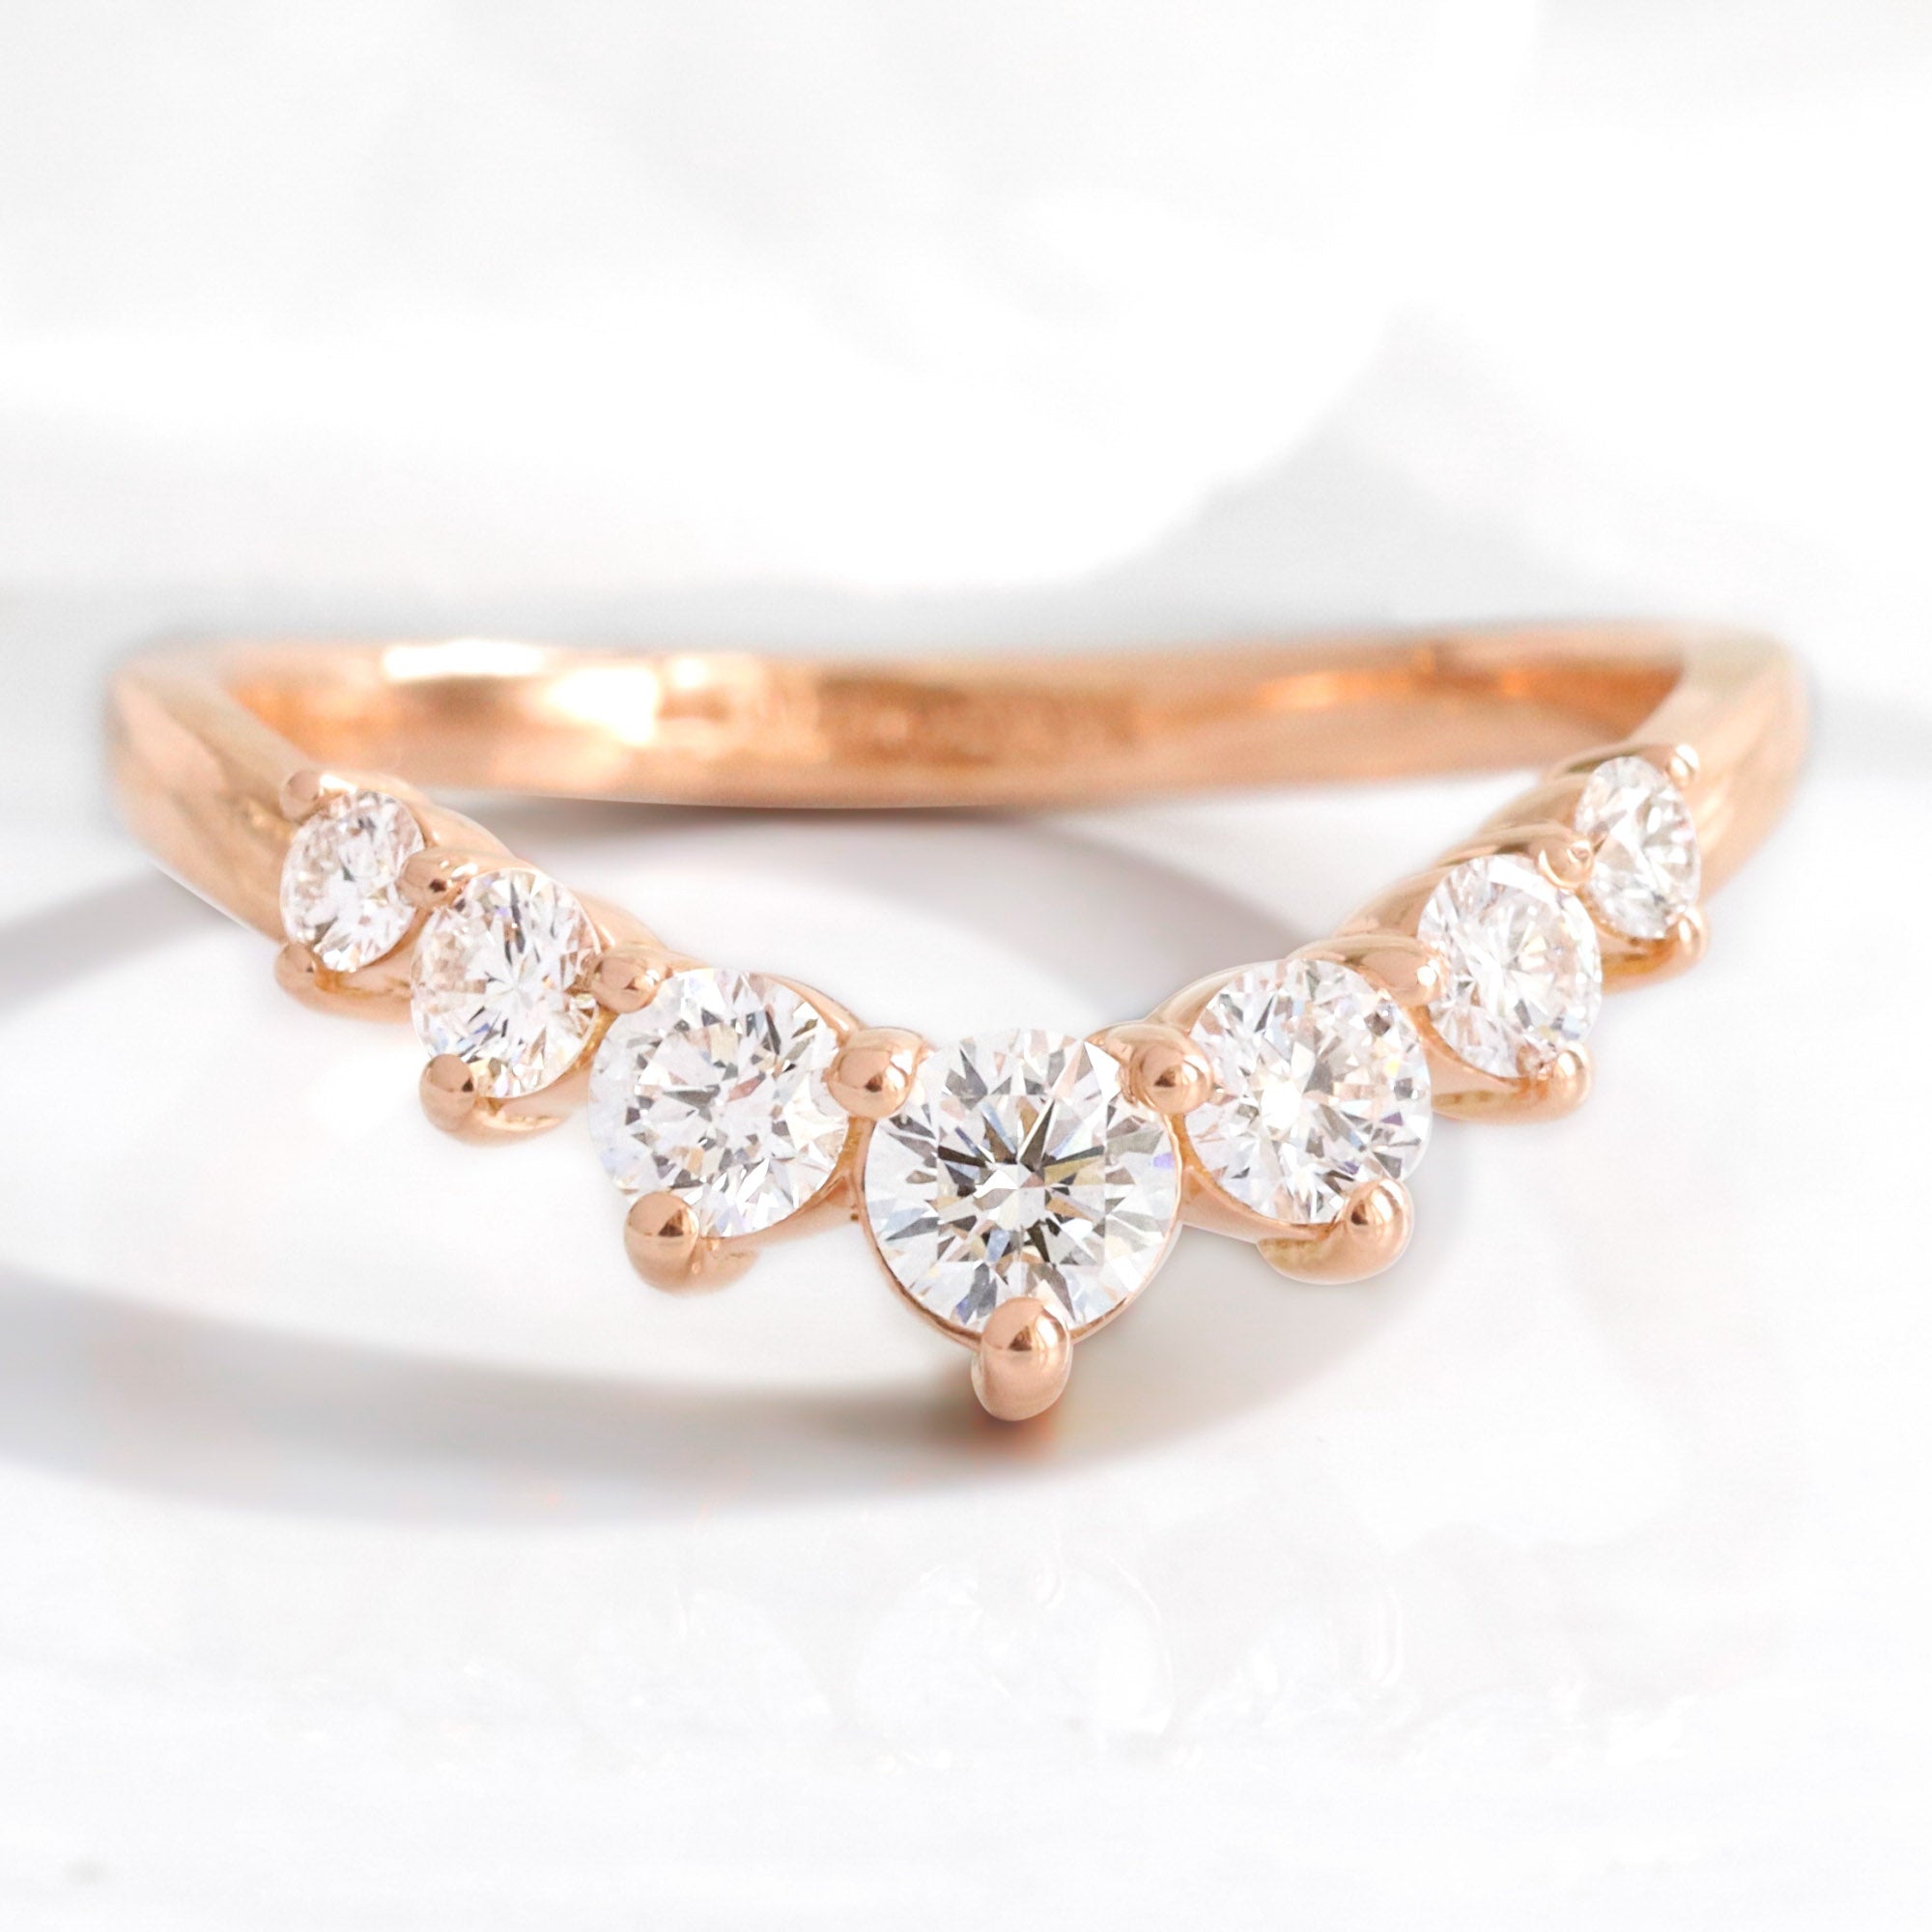 Large 7 diamond wedding ring rose gold U shaped curved band la more design jewelry